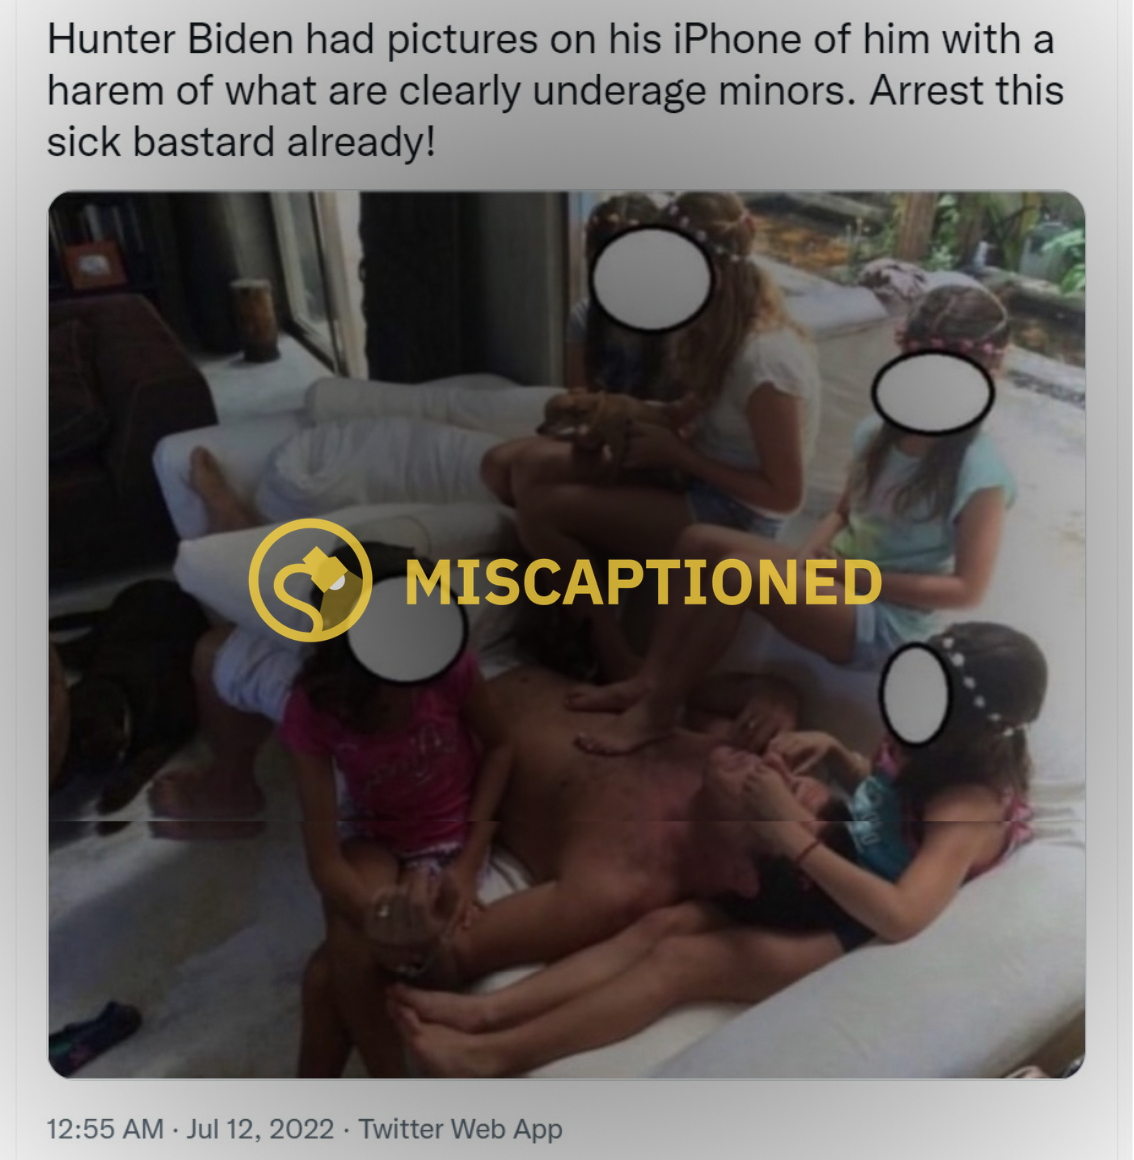 Photo Does Not Show Hunter Biden with Underage Girls